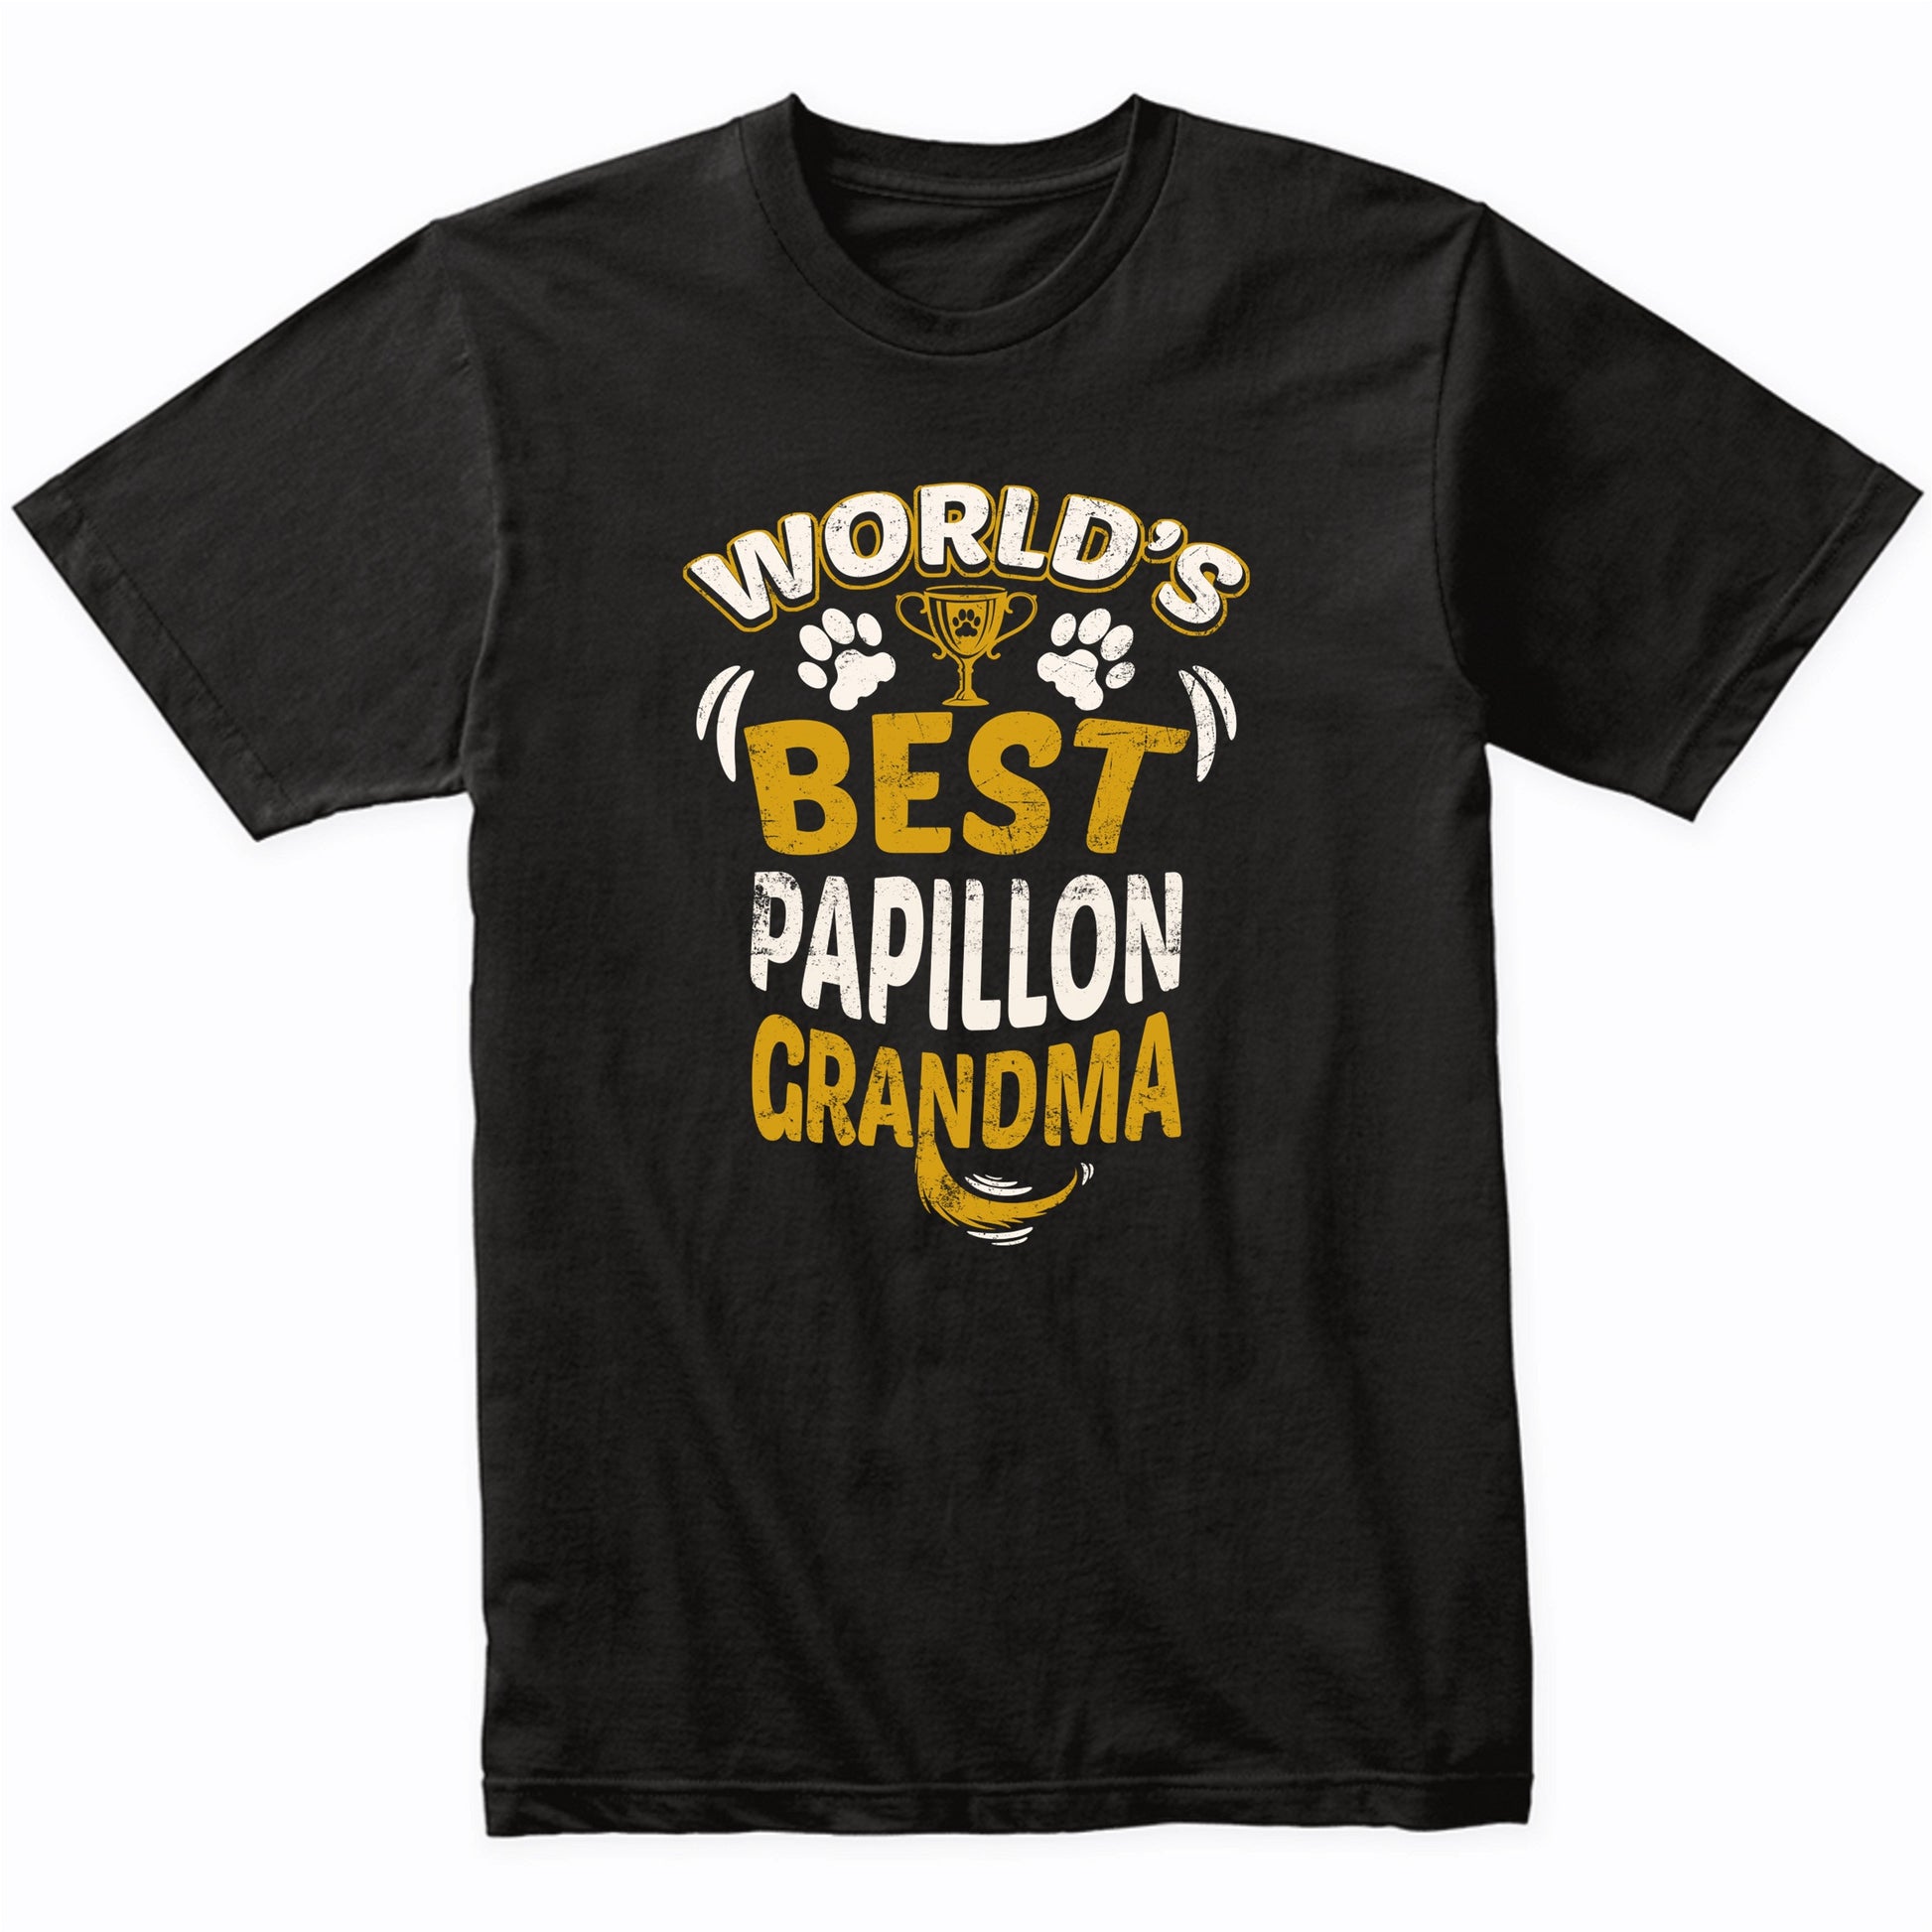 World's Best Papillon Grandma Graphic T-Shirt